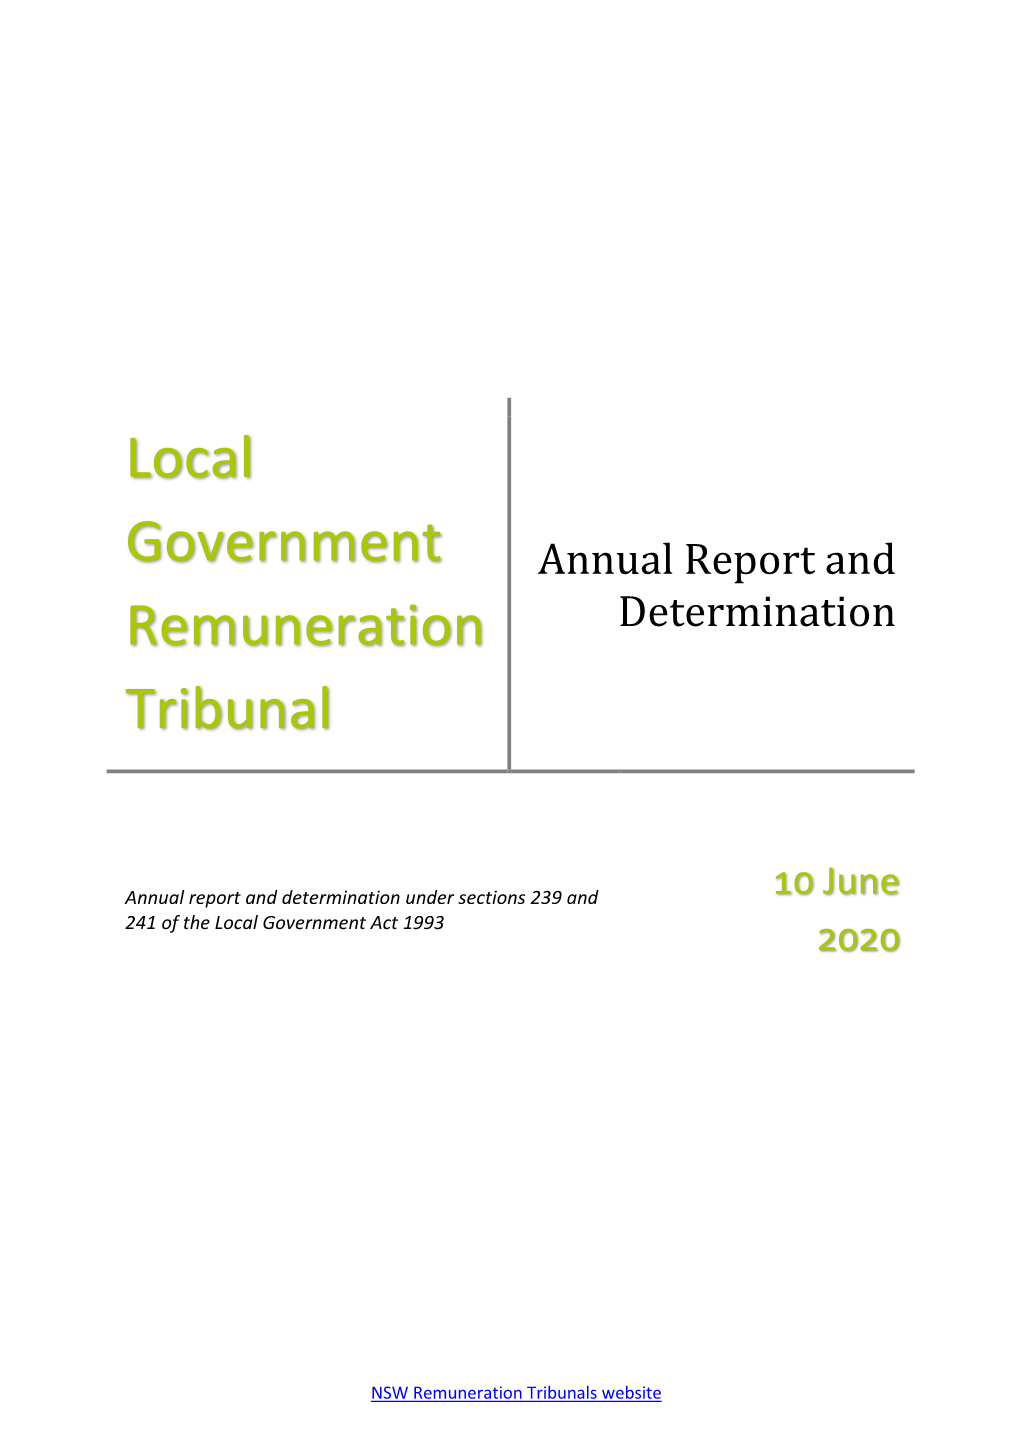 Local Government Remuneration Tribunal